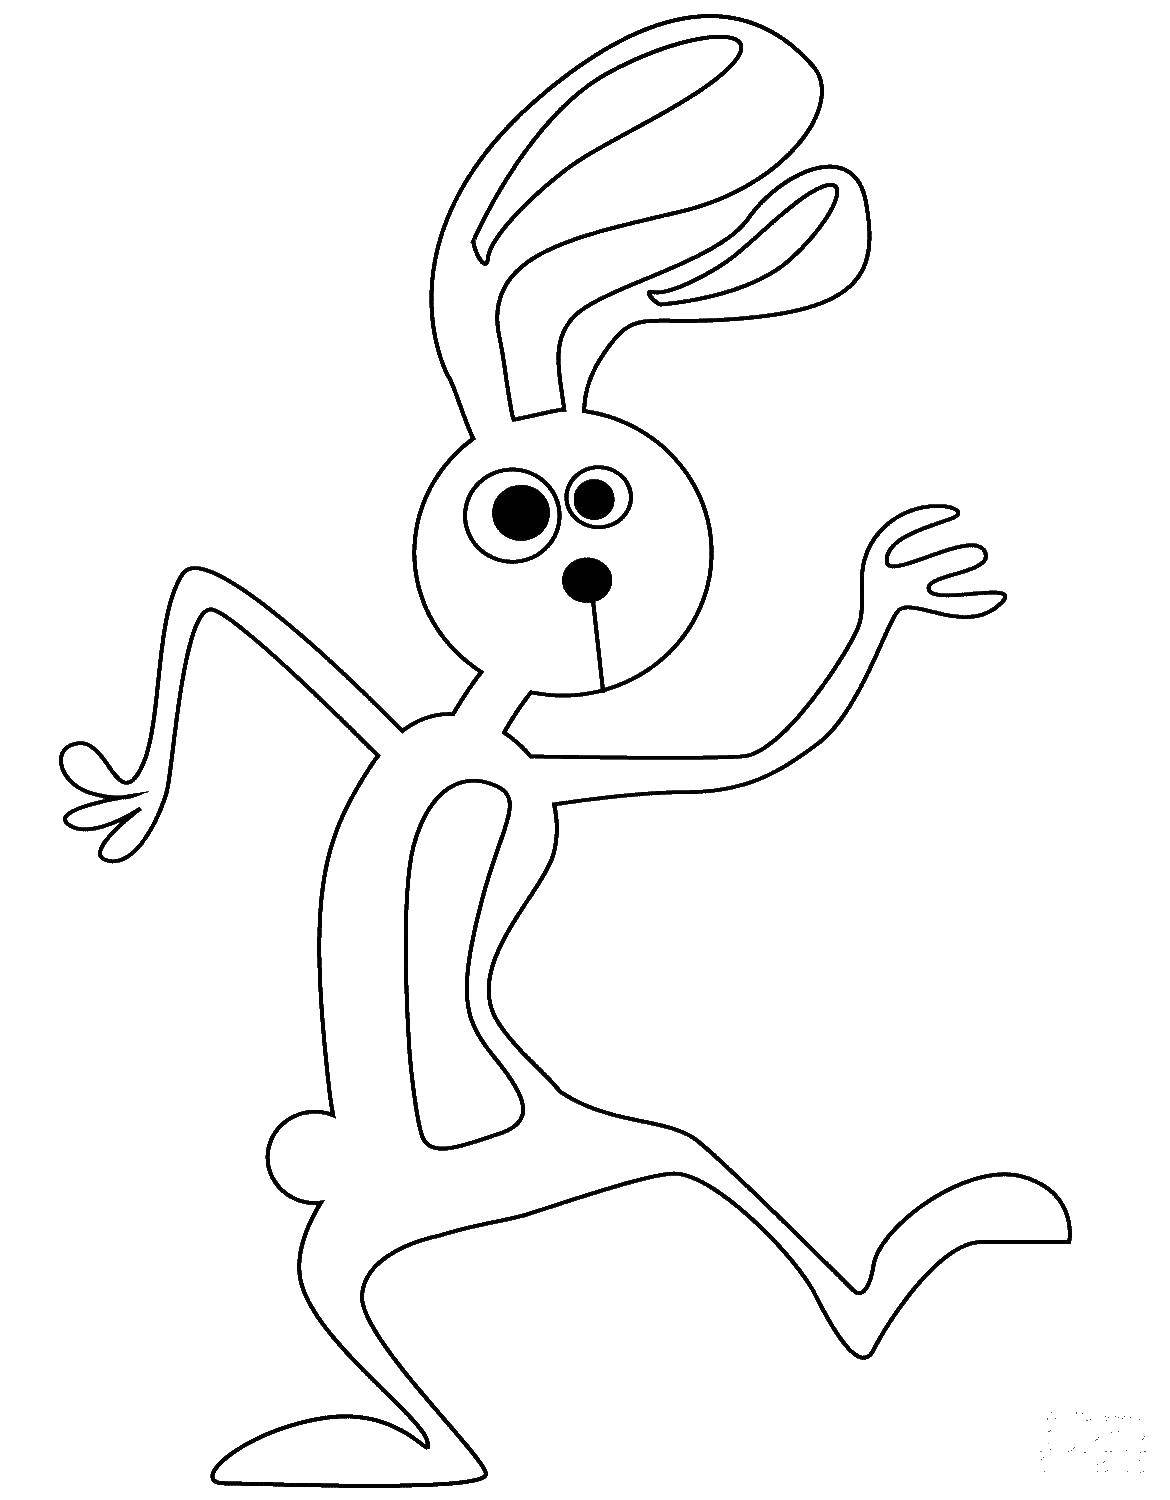 Coloring Dancing rabbit. Category the rabbit. Tags:  animals, Bunny, rabbit.